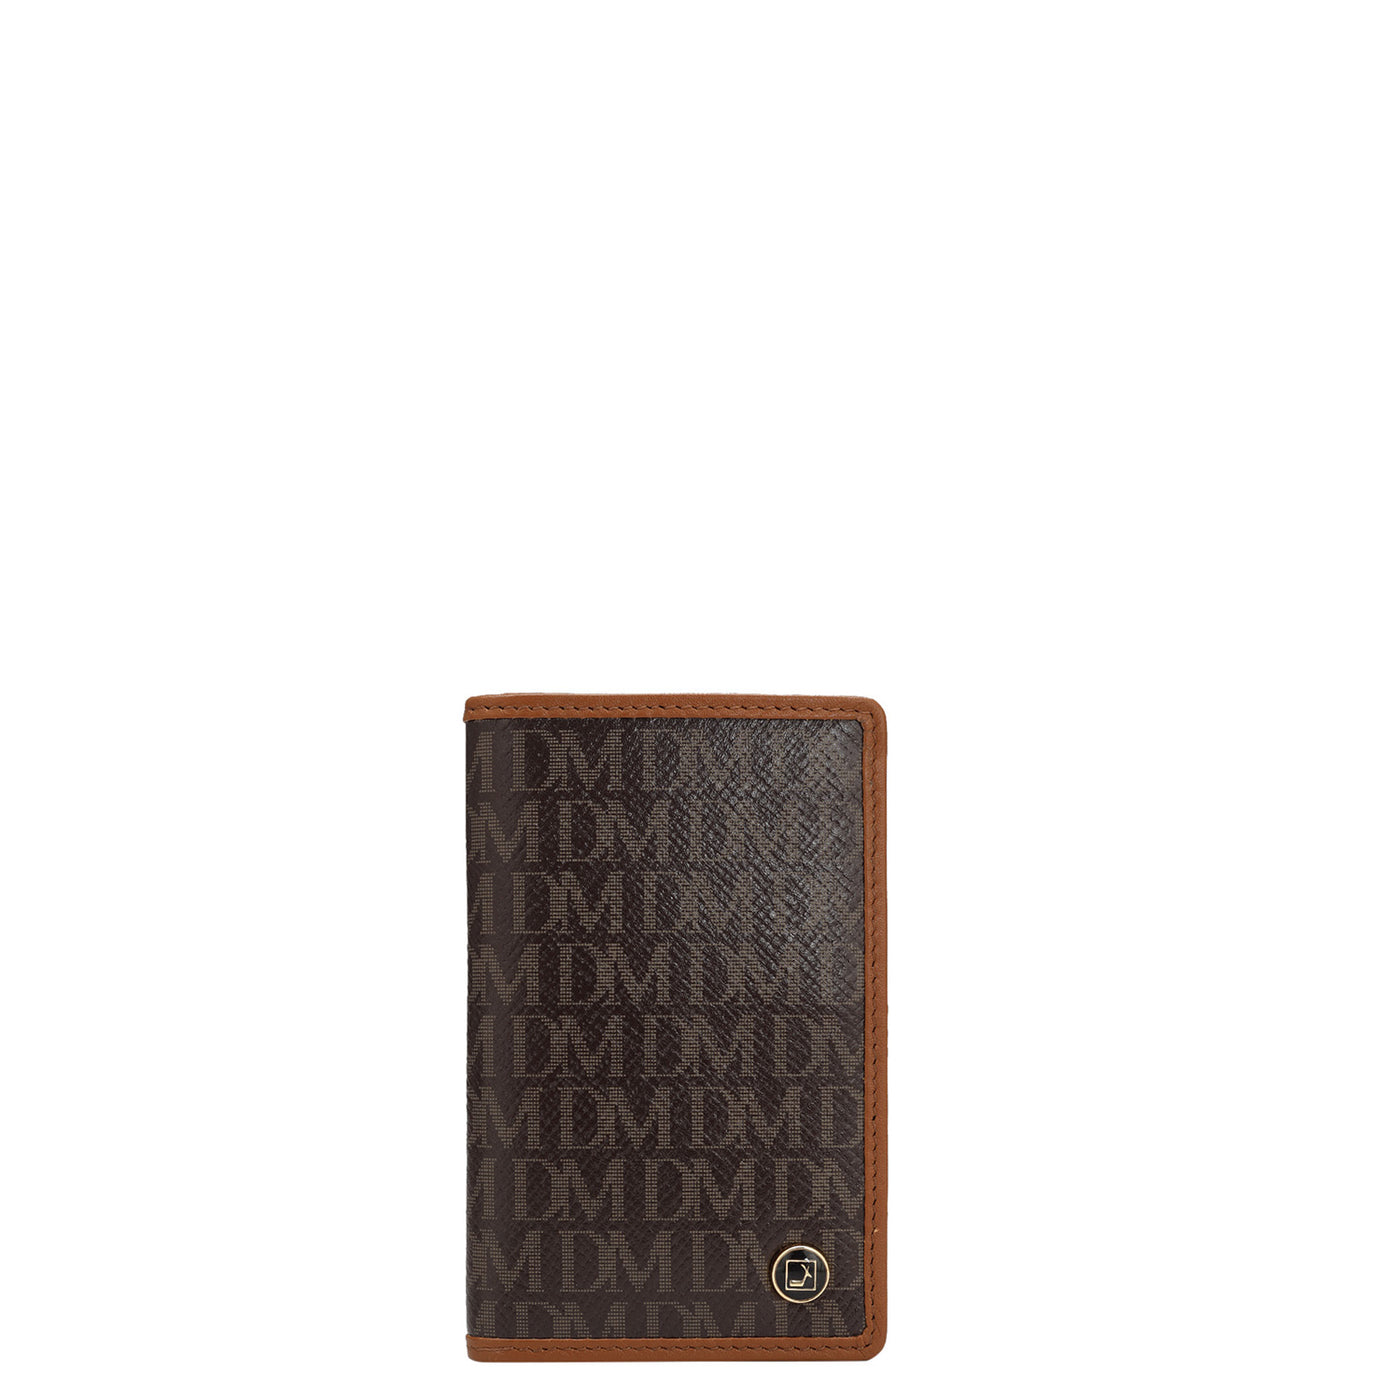 Monogram Leather Card Case - Chocolate